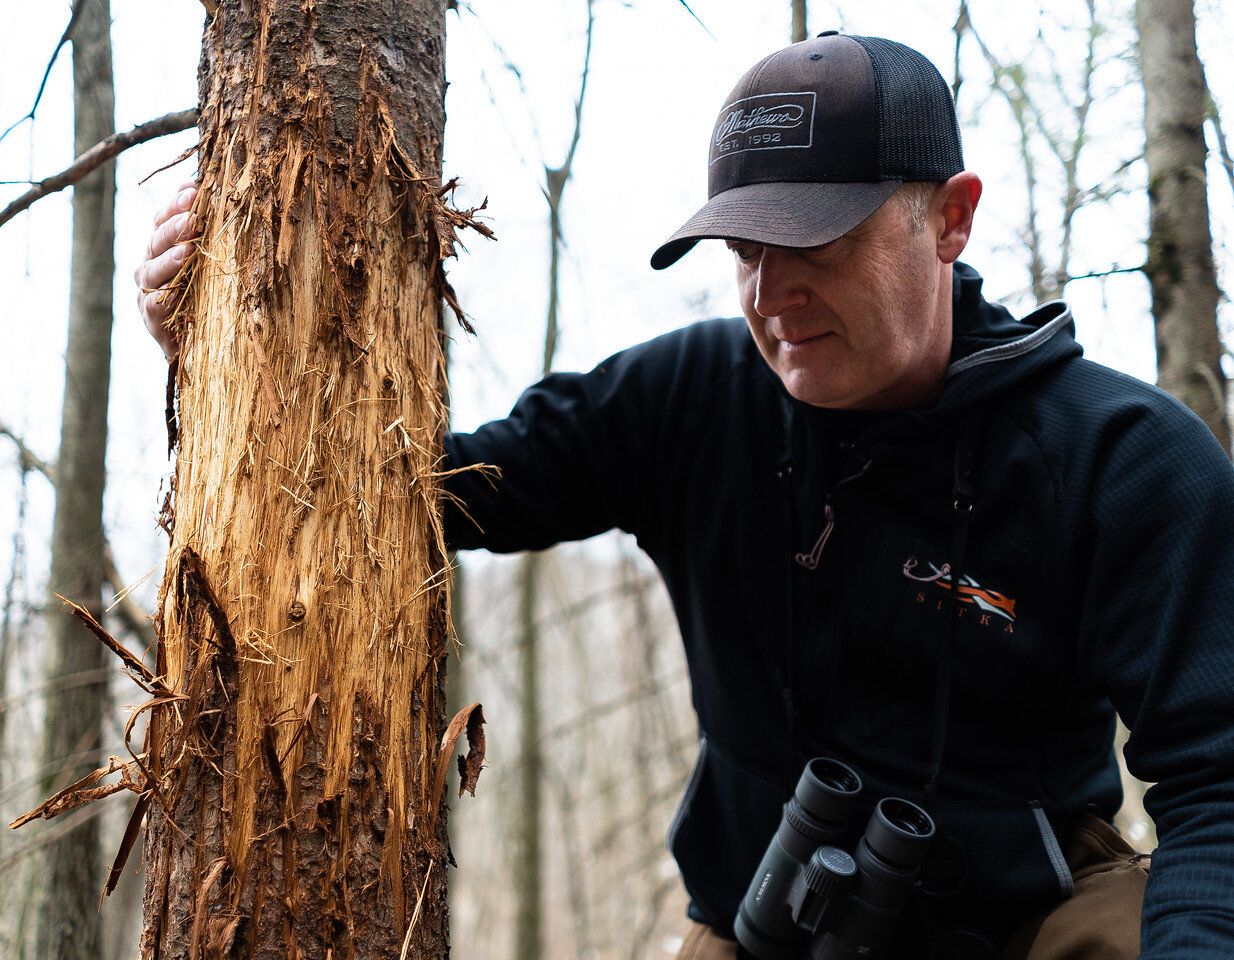 Jeff Sturgis looks at a whitetail scrape on a tree, whitetail habitat concept. 